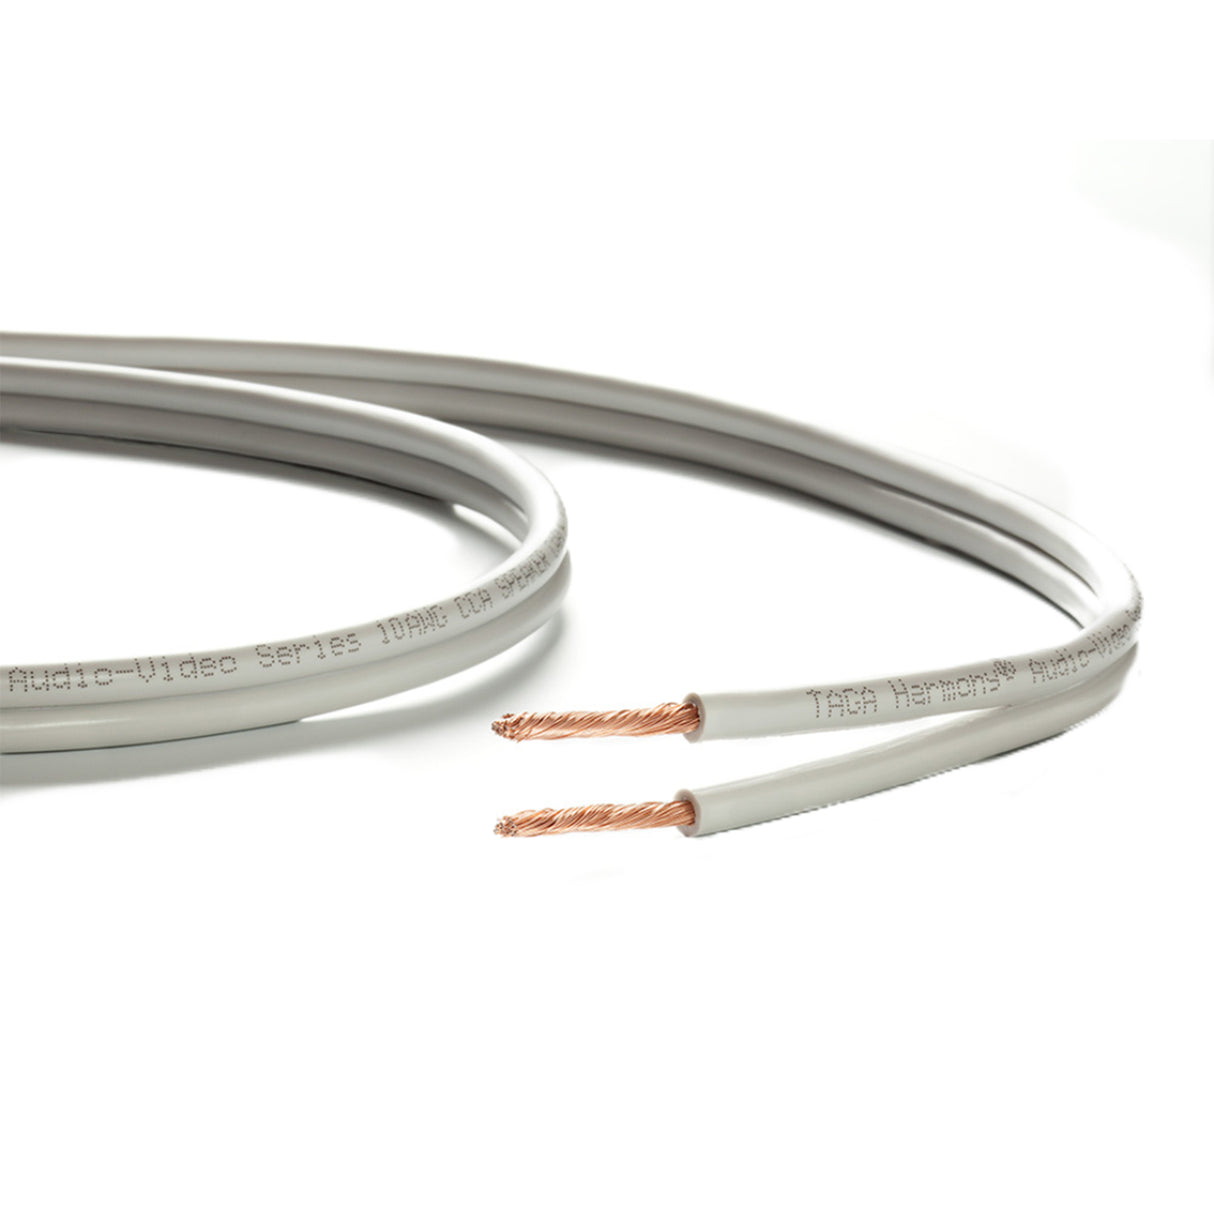 Taga Harmony TAVC-14 G Speaker Cable (Grey Colour)